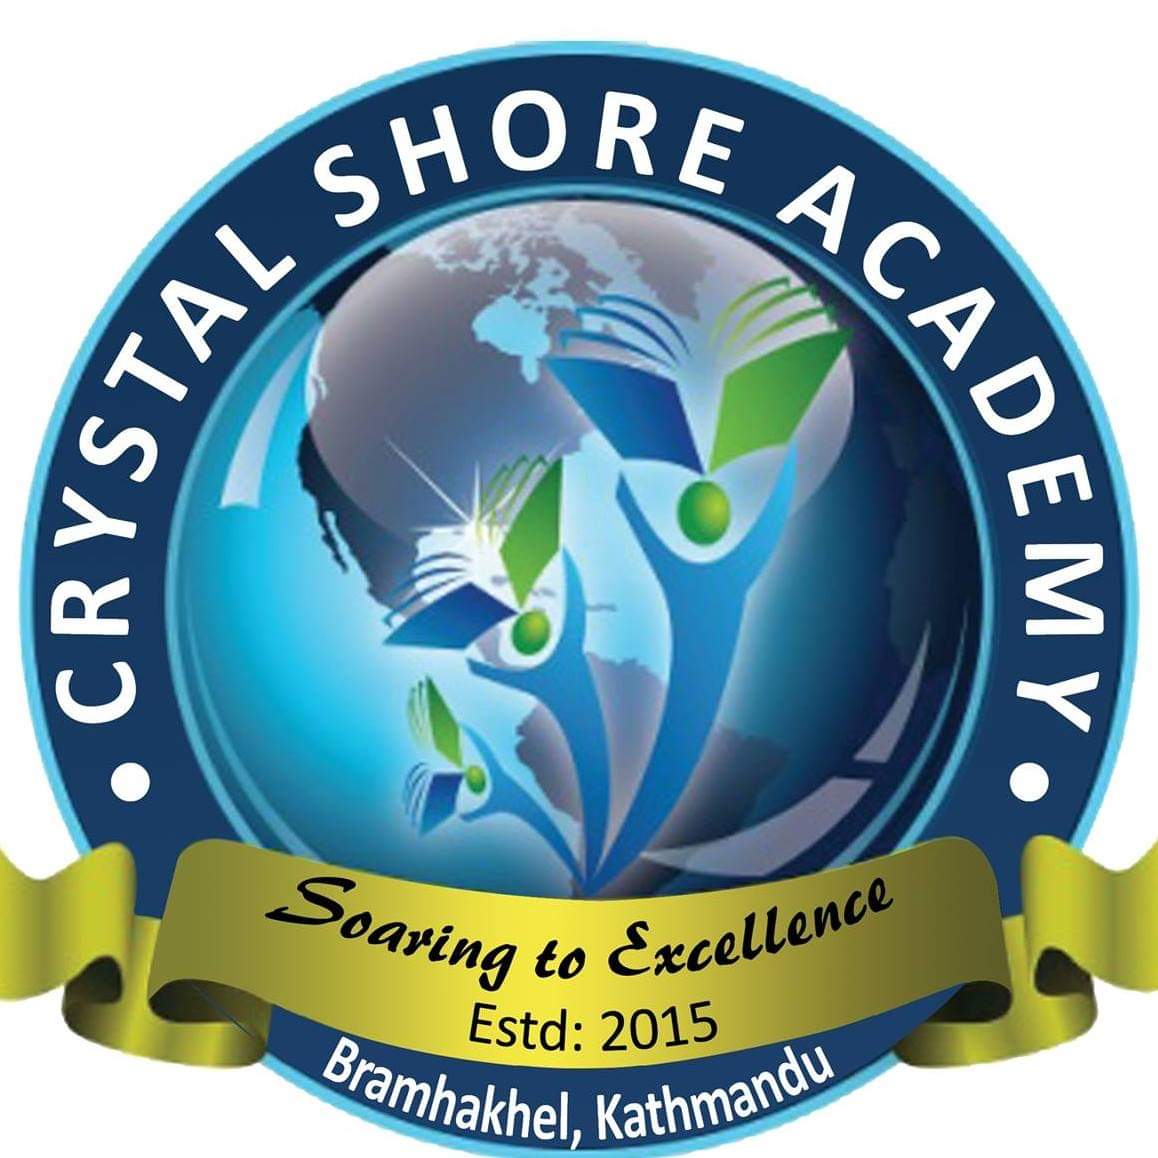 Crystalshore Educational Academy